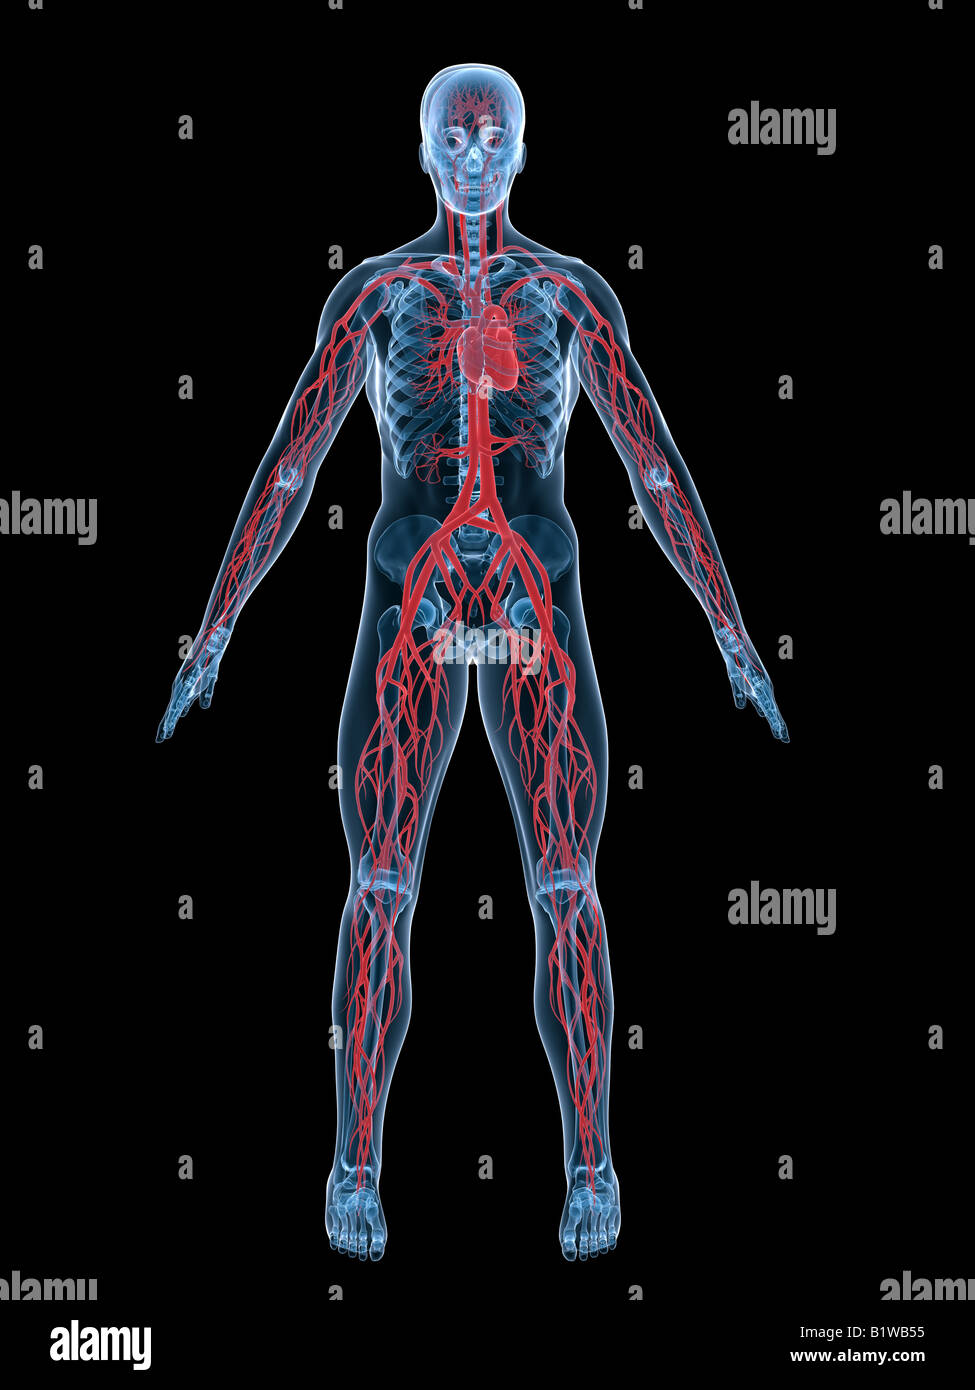 cardiovascular system Stock Photo